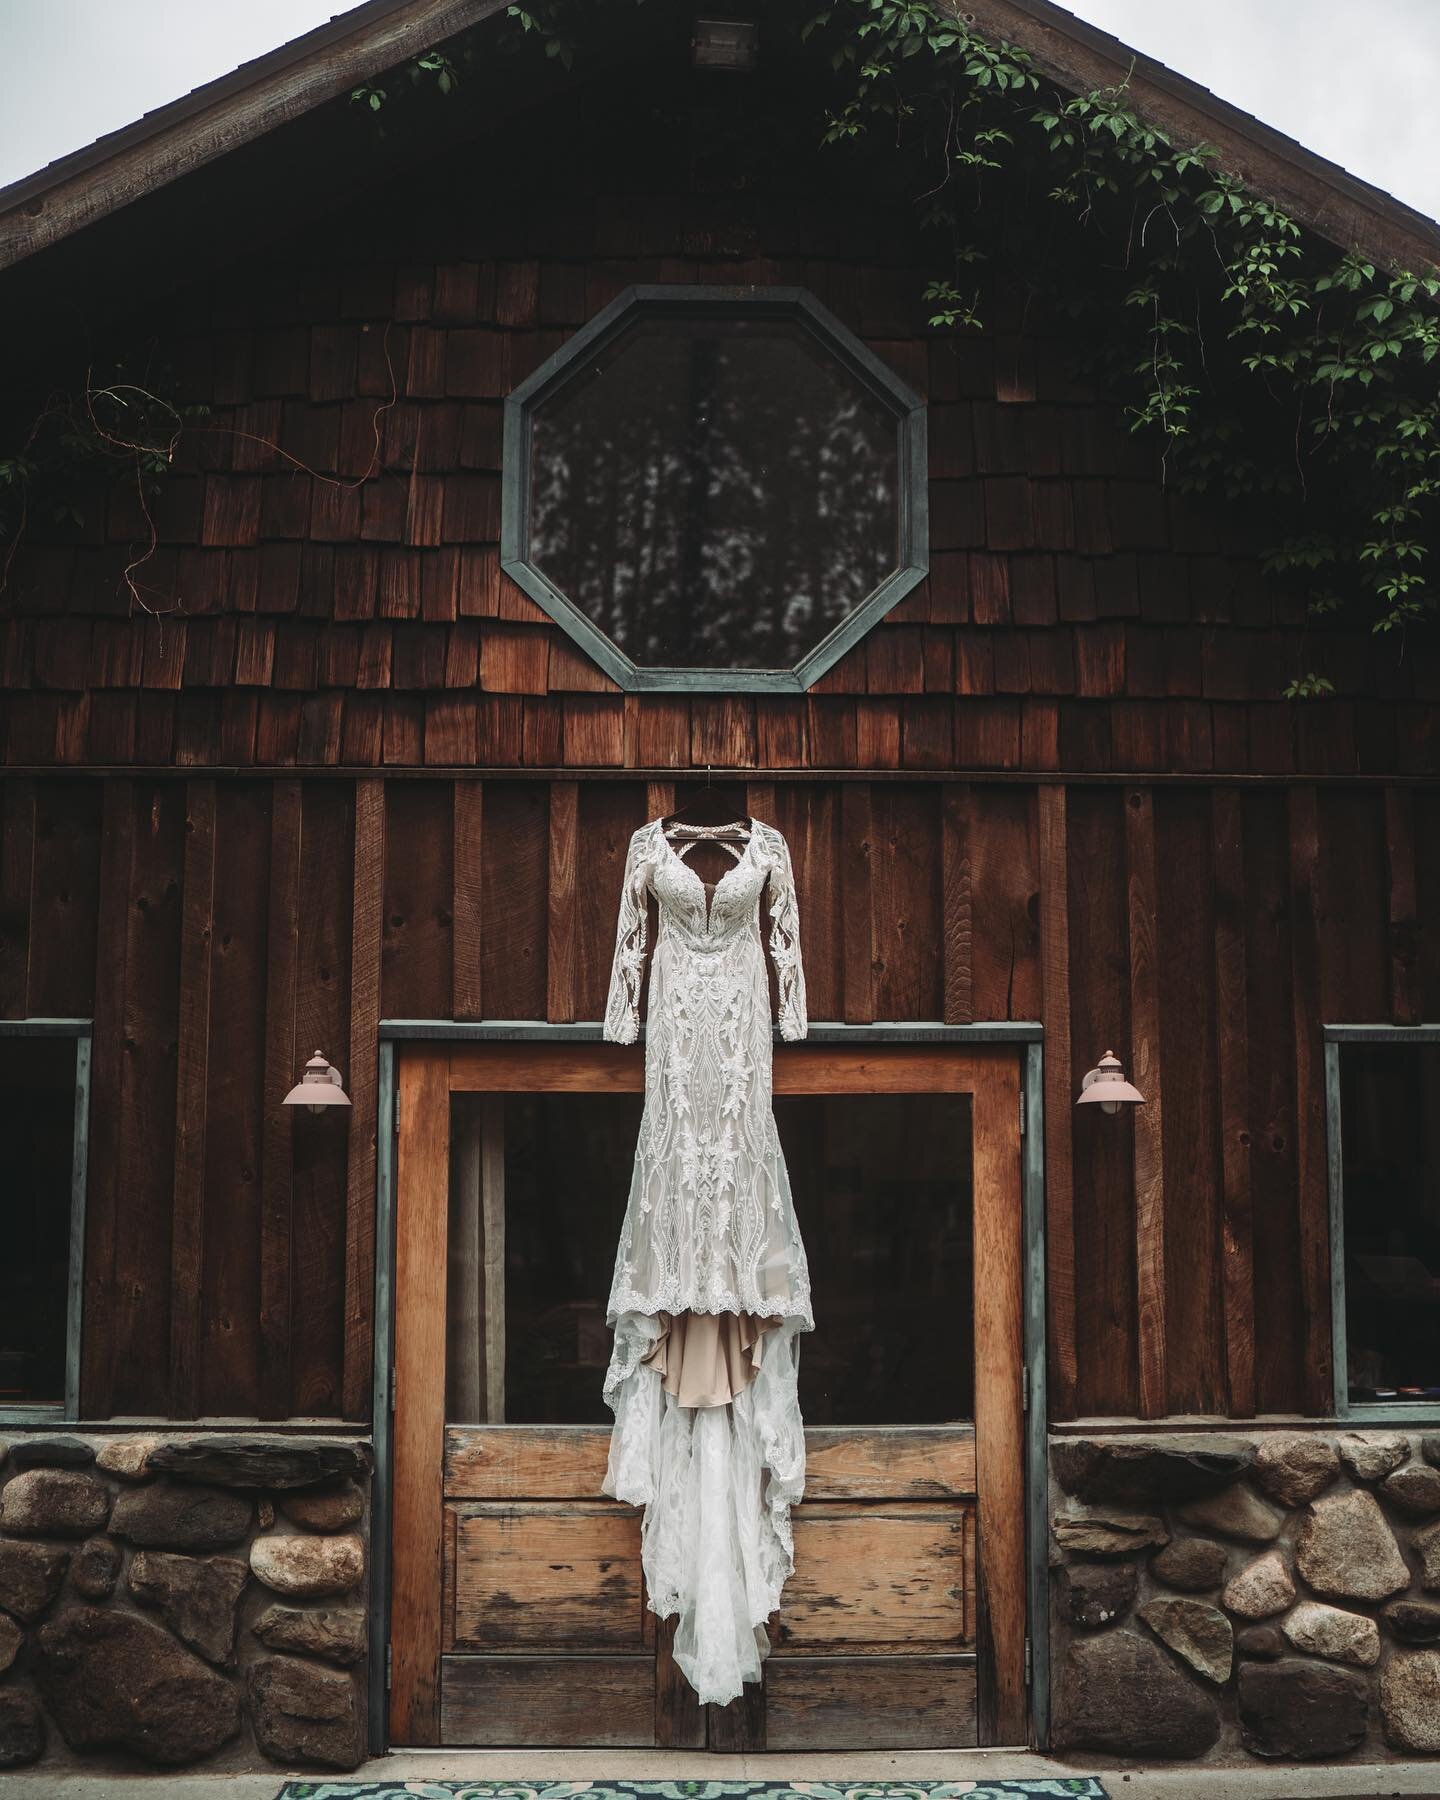 The dress. The greenhouse. The vibe. 
&bull;
#moodyvibes #weddingdress #bohowedding #weddingphotography #greenhousewedding